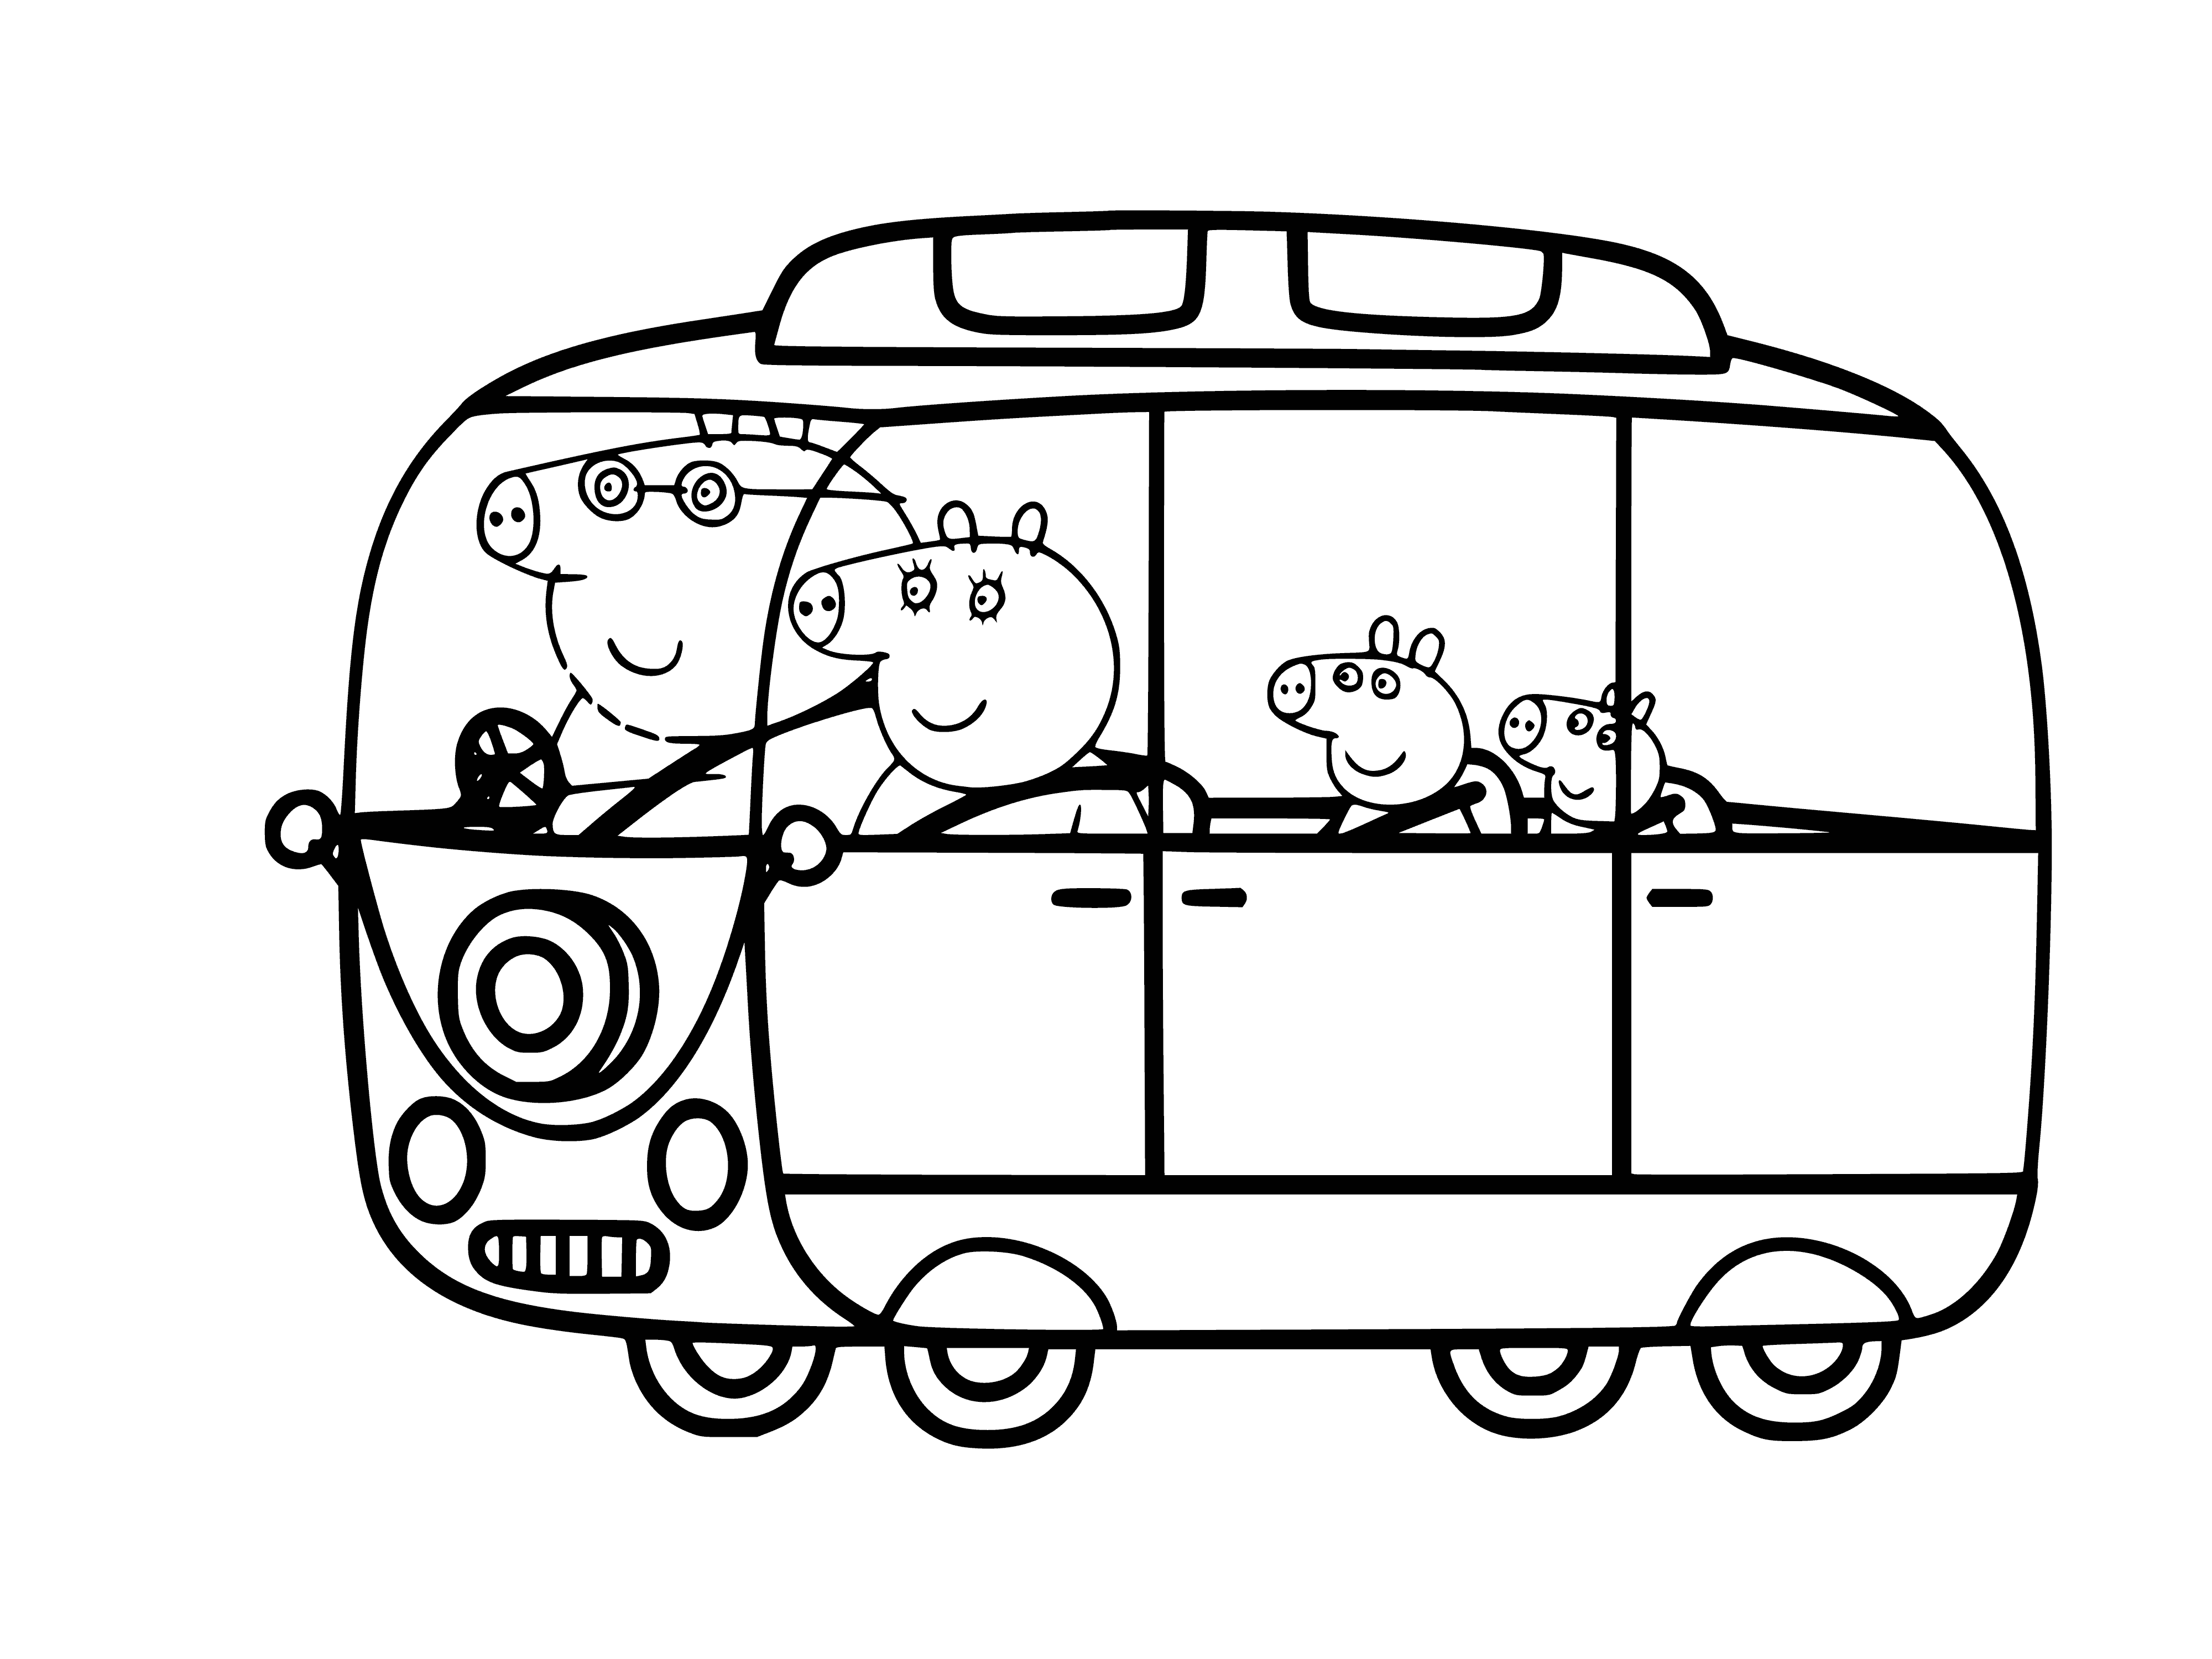 coloring page: : Peppa Pig family drives, but Peppa rides atop car.